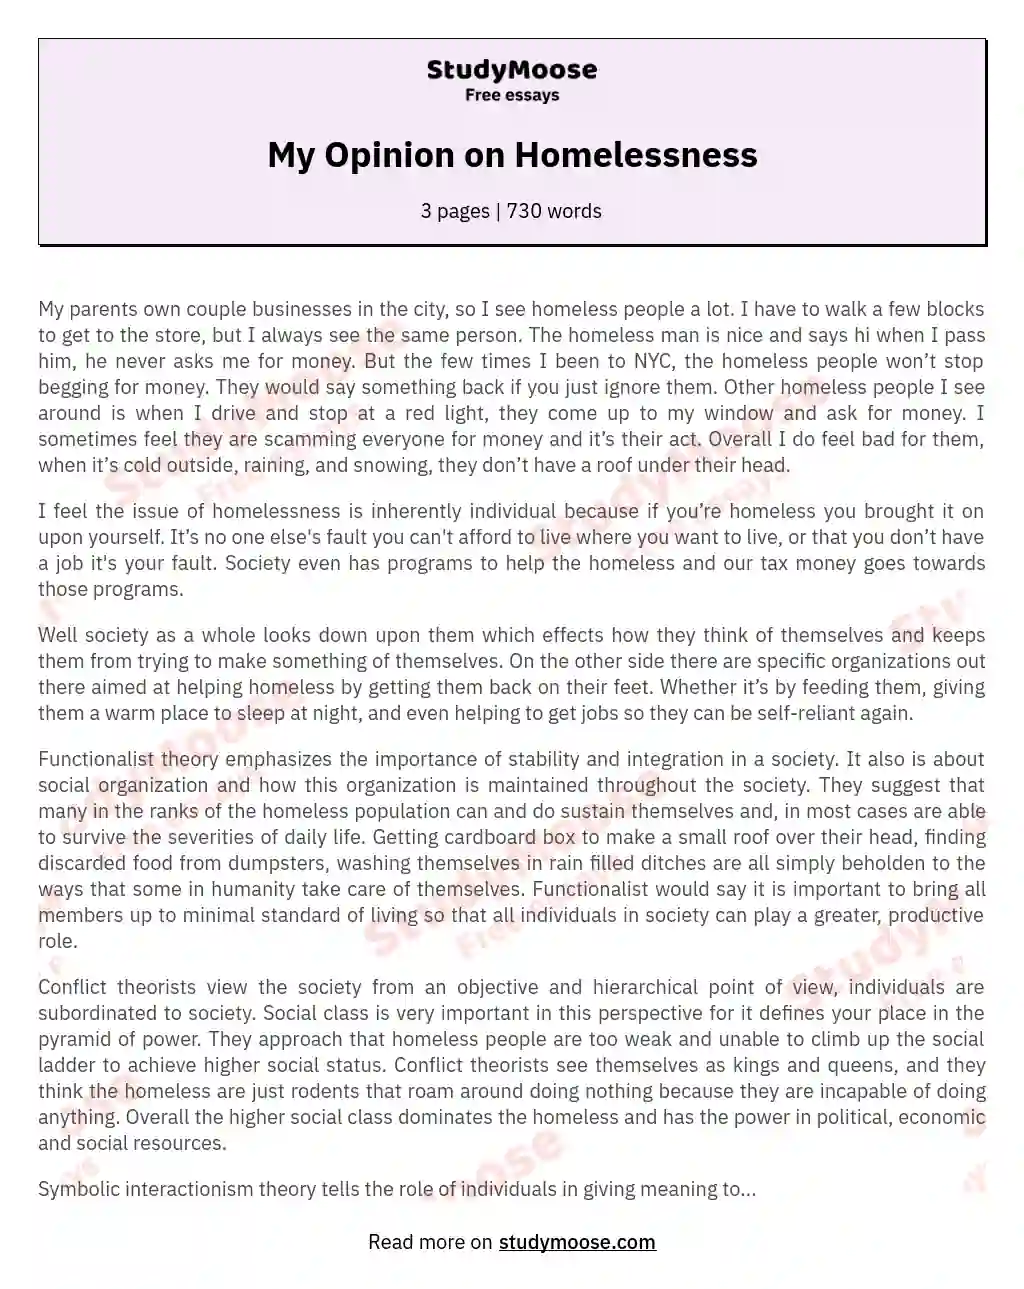 My Opinion on Homelessness essay